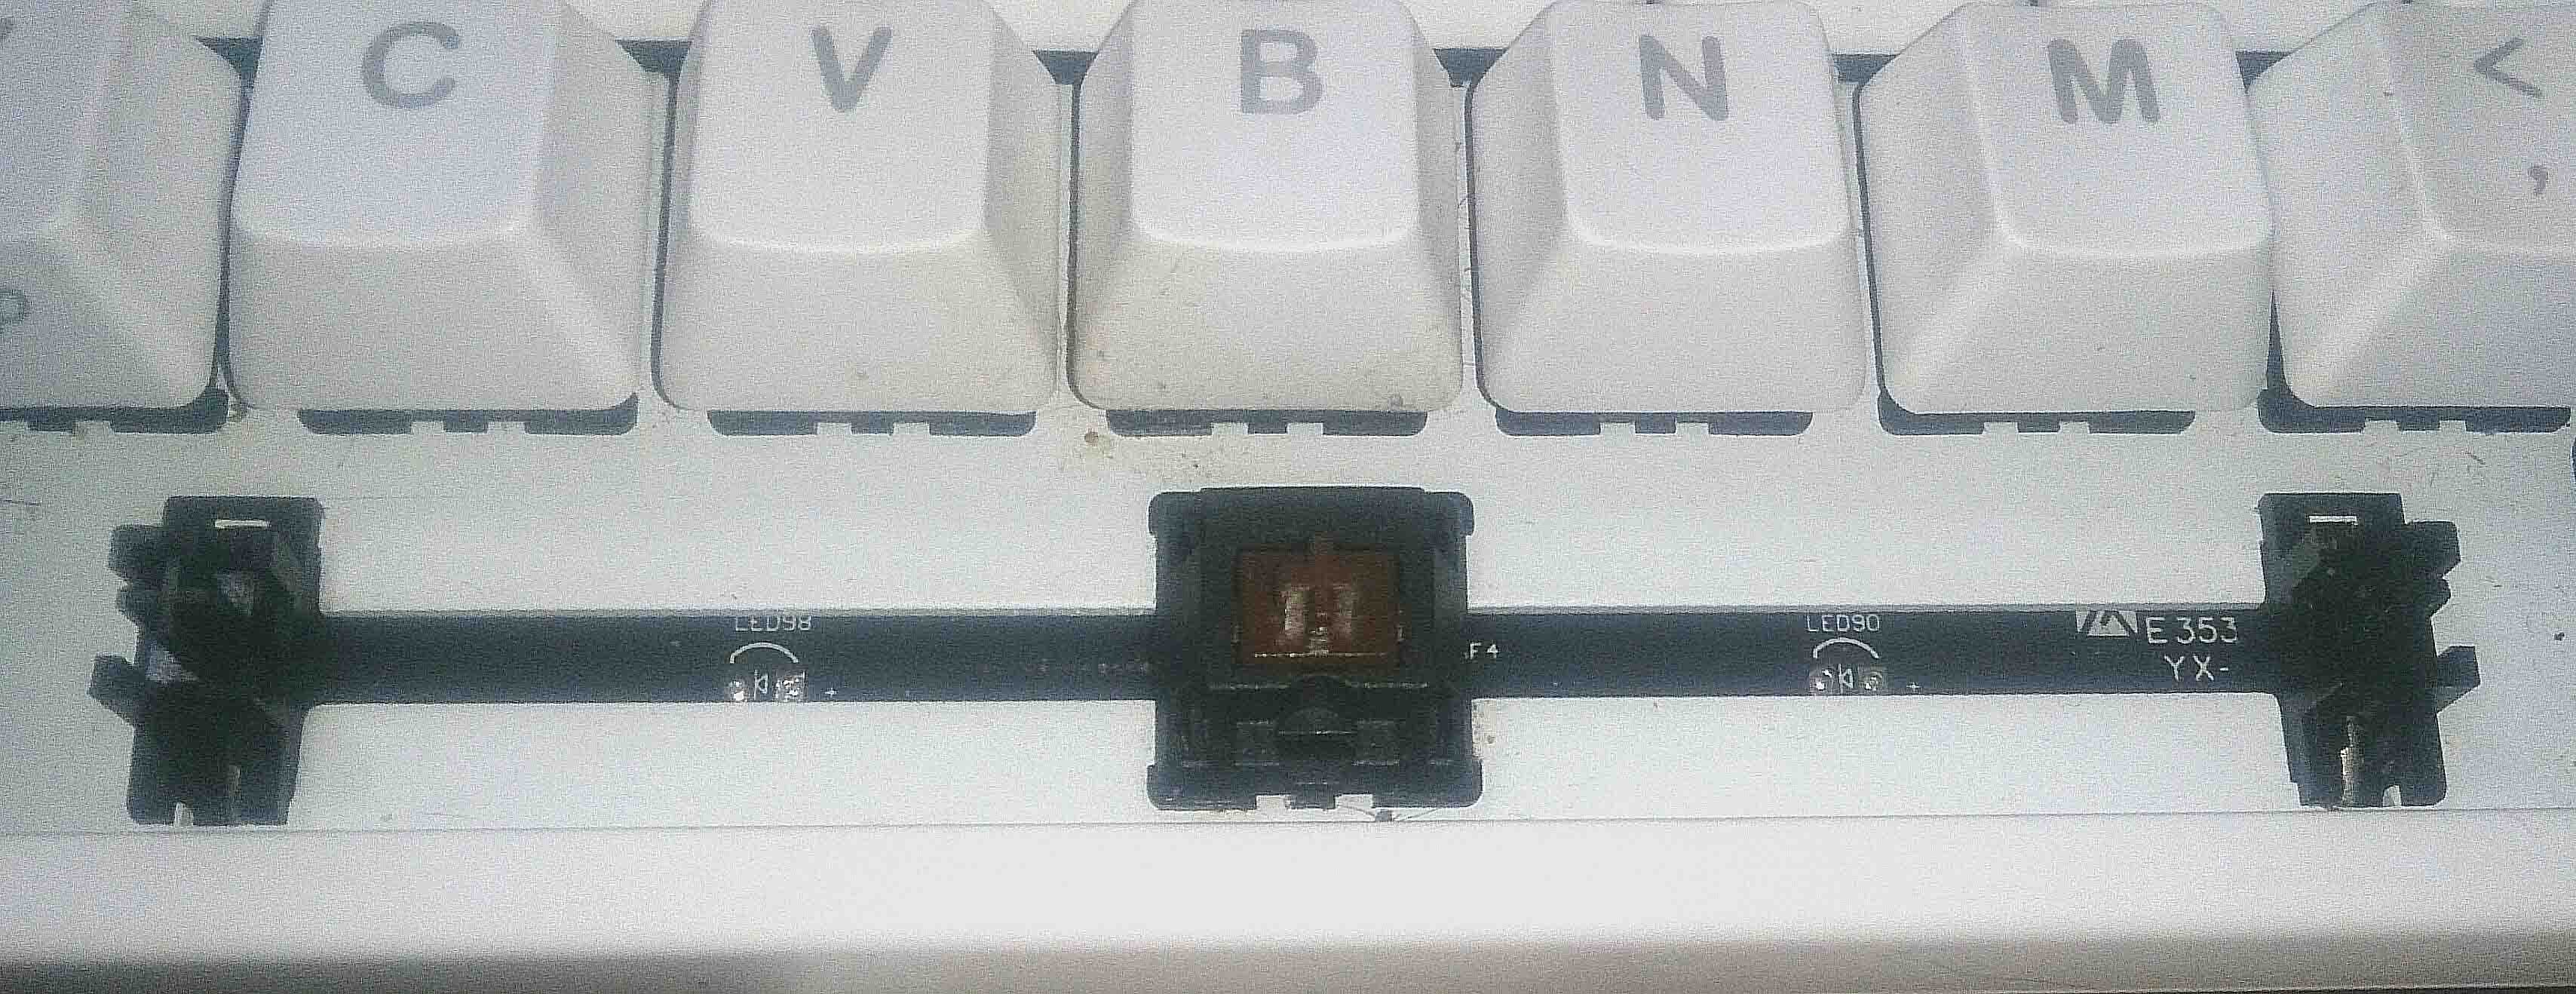 cherry机械键盘的空格键很松,是为什么?